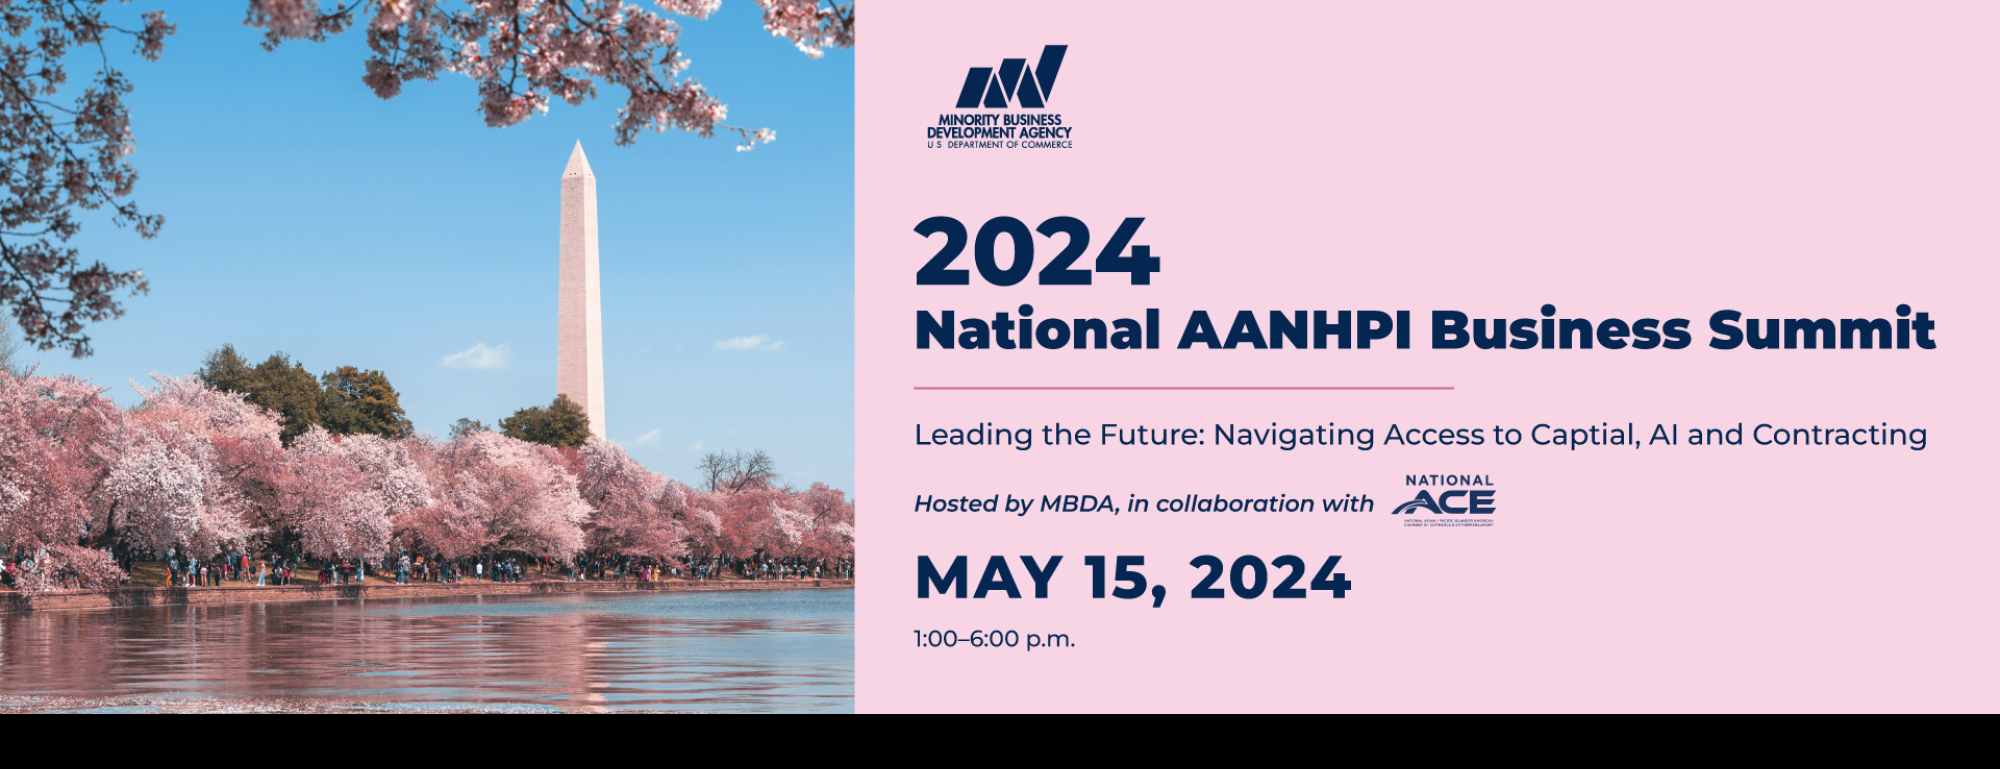 2024 National AANHPI Business Summit